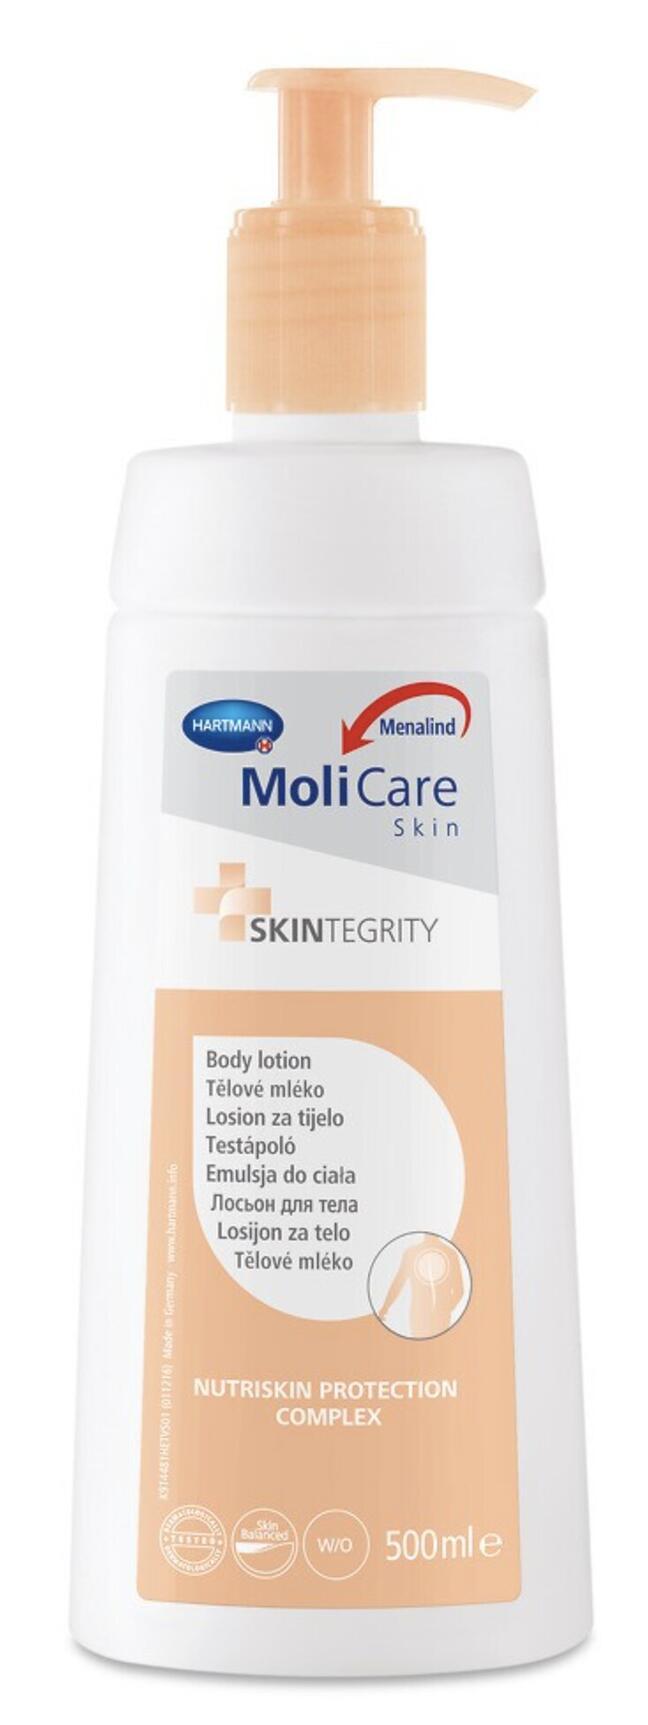 MoliCare Skin Лосион за тяло